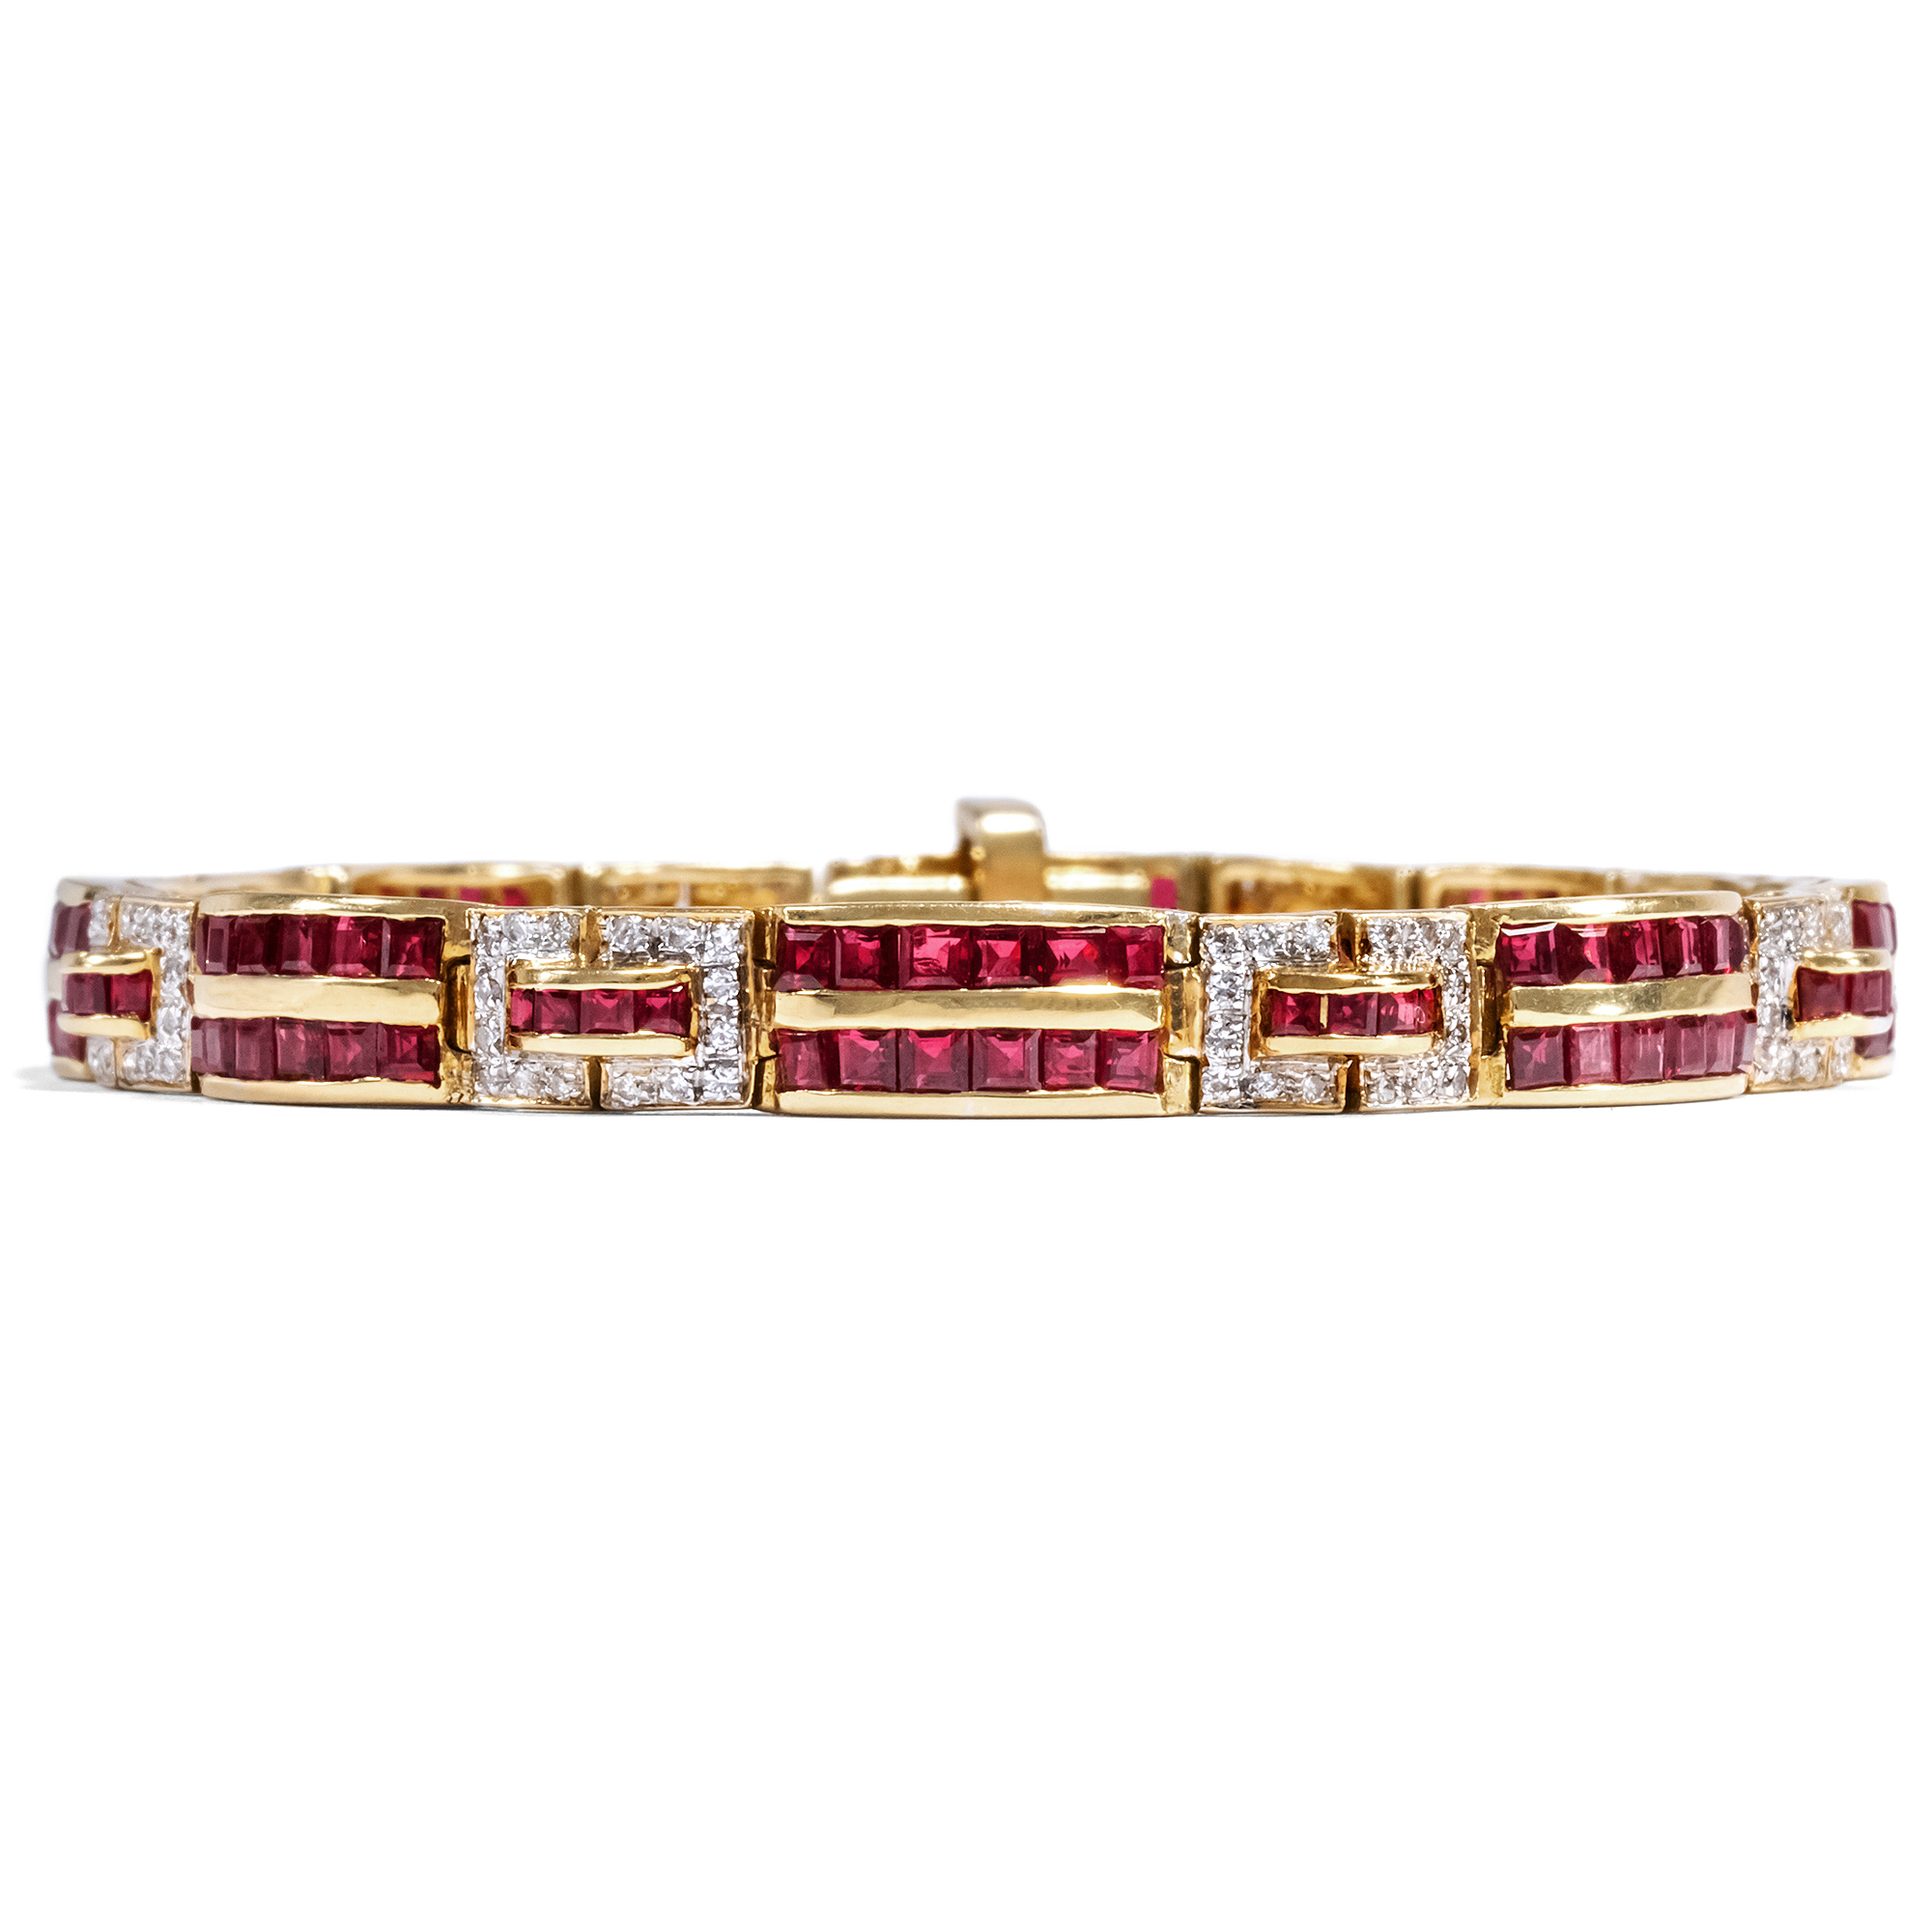 Luxury Vintage Bracelet With Diamonds & Rubies, Germany ca. 1985